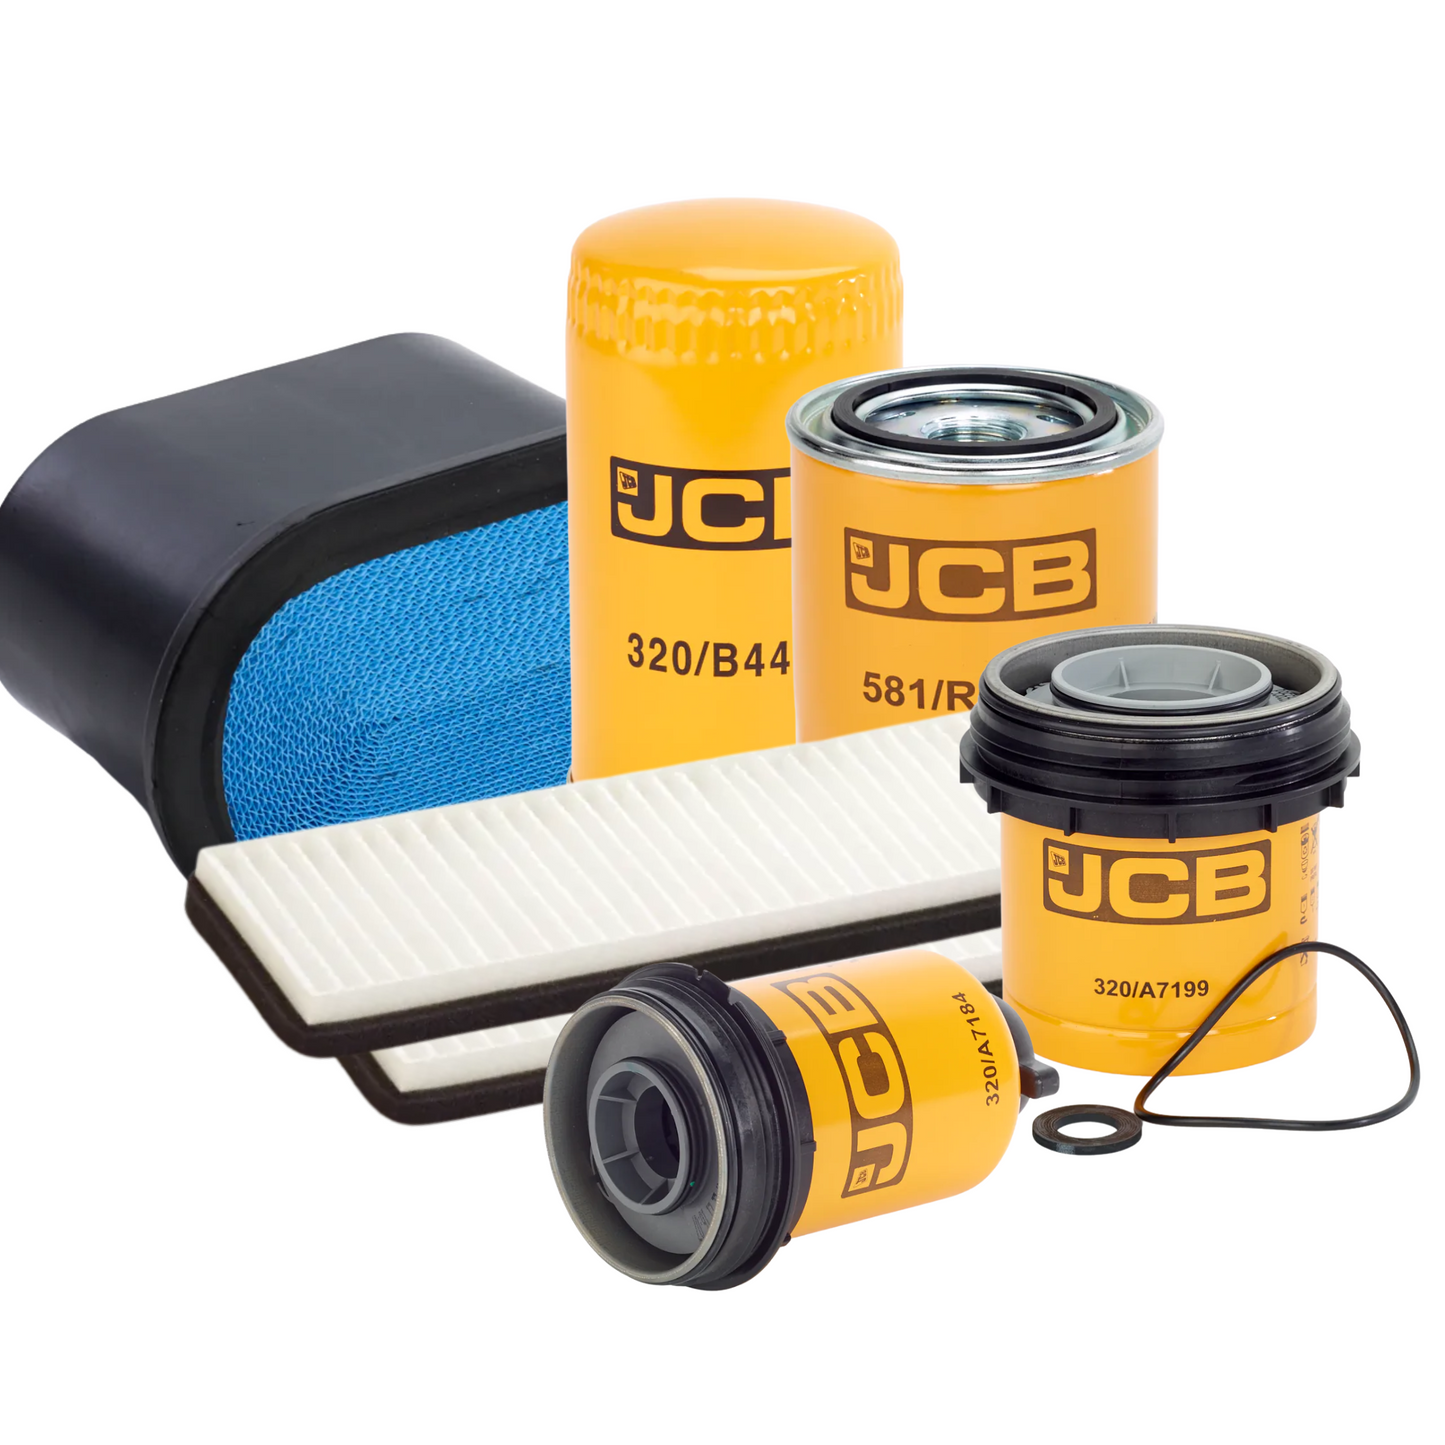 JCB 535-95 7000 Hour Filter Service Kit